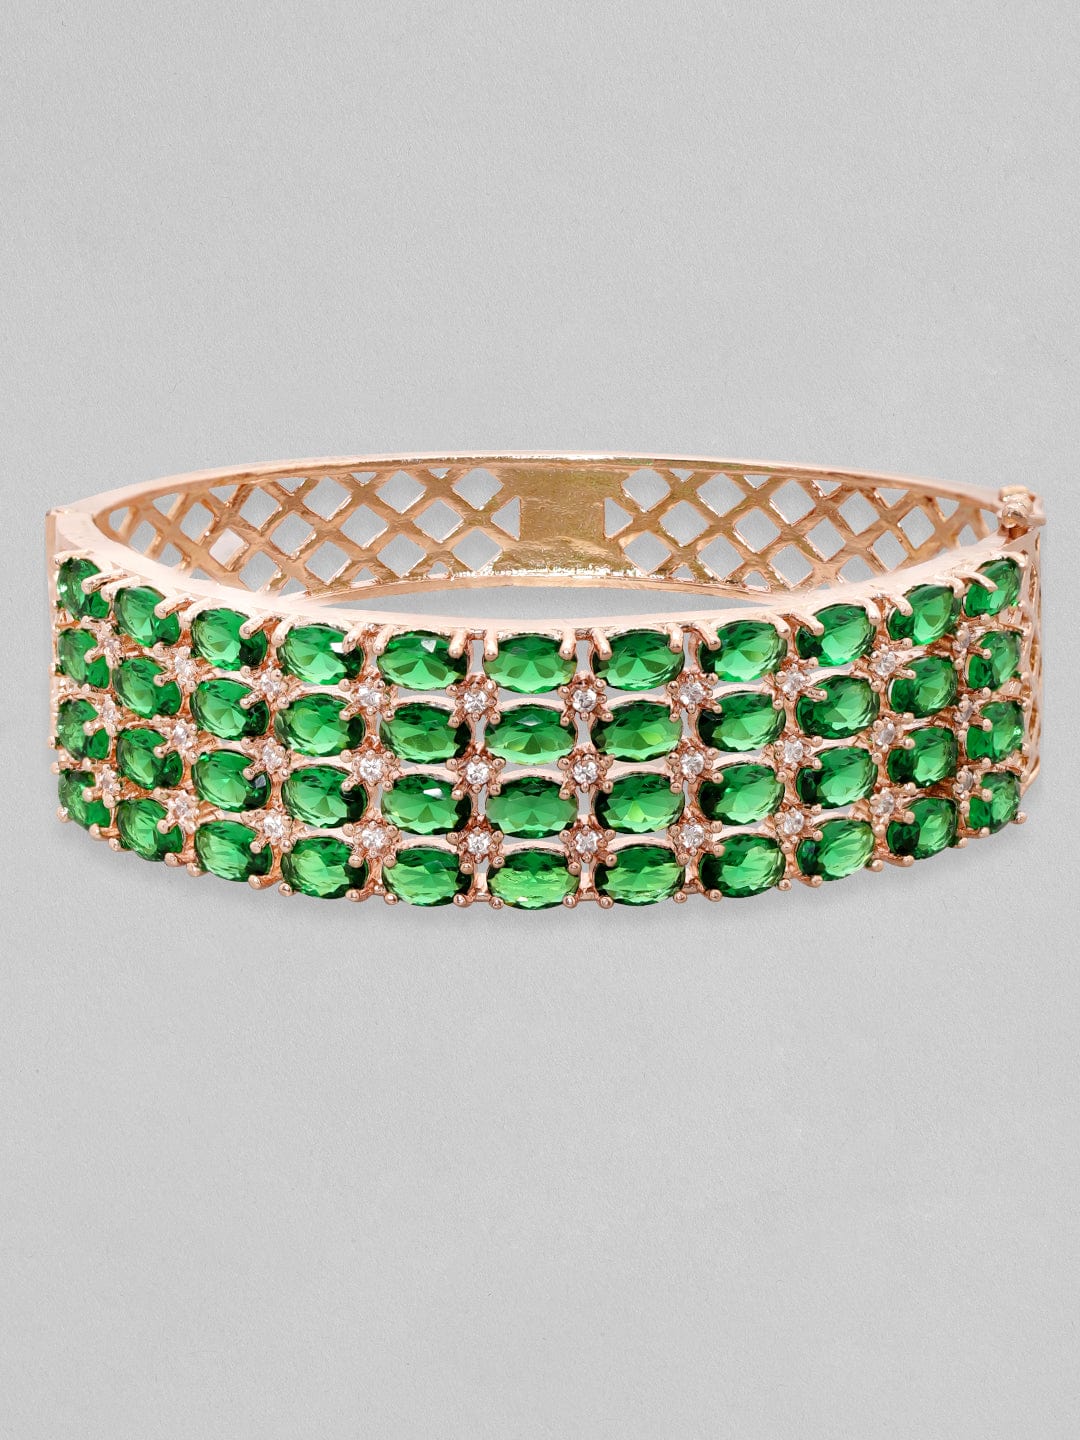 Graduated Vivid Green Colombian Emerald Bracelet – NaturalGemsAtelier